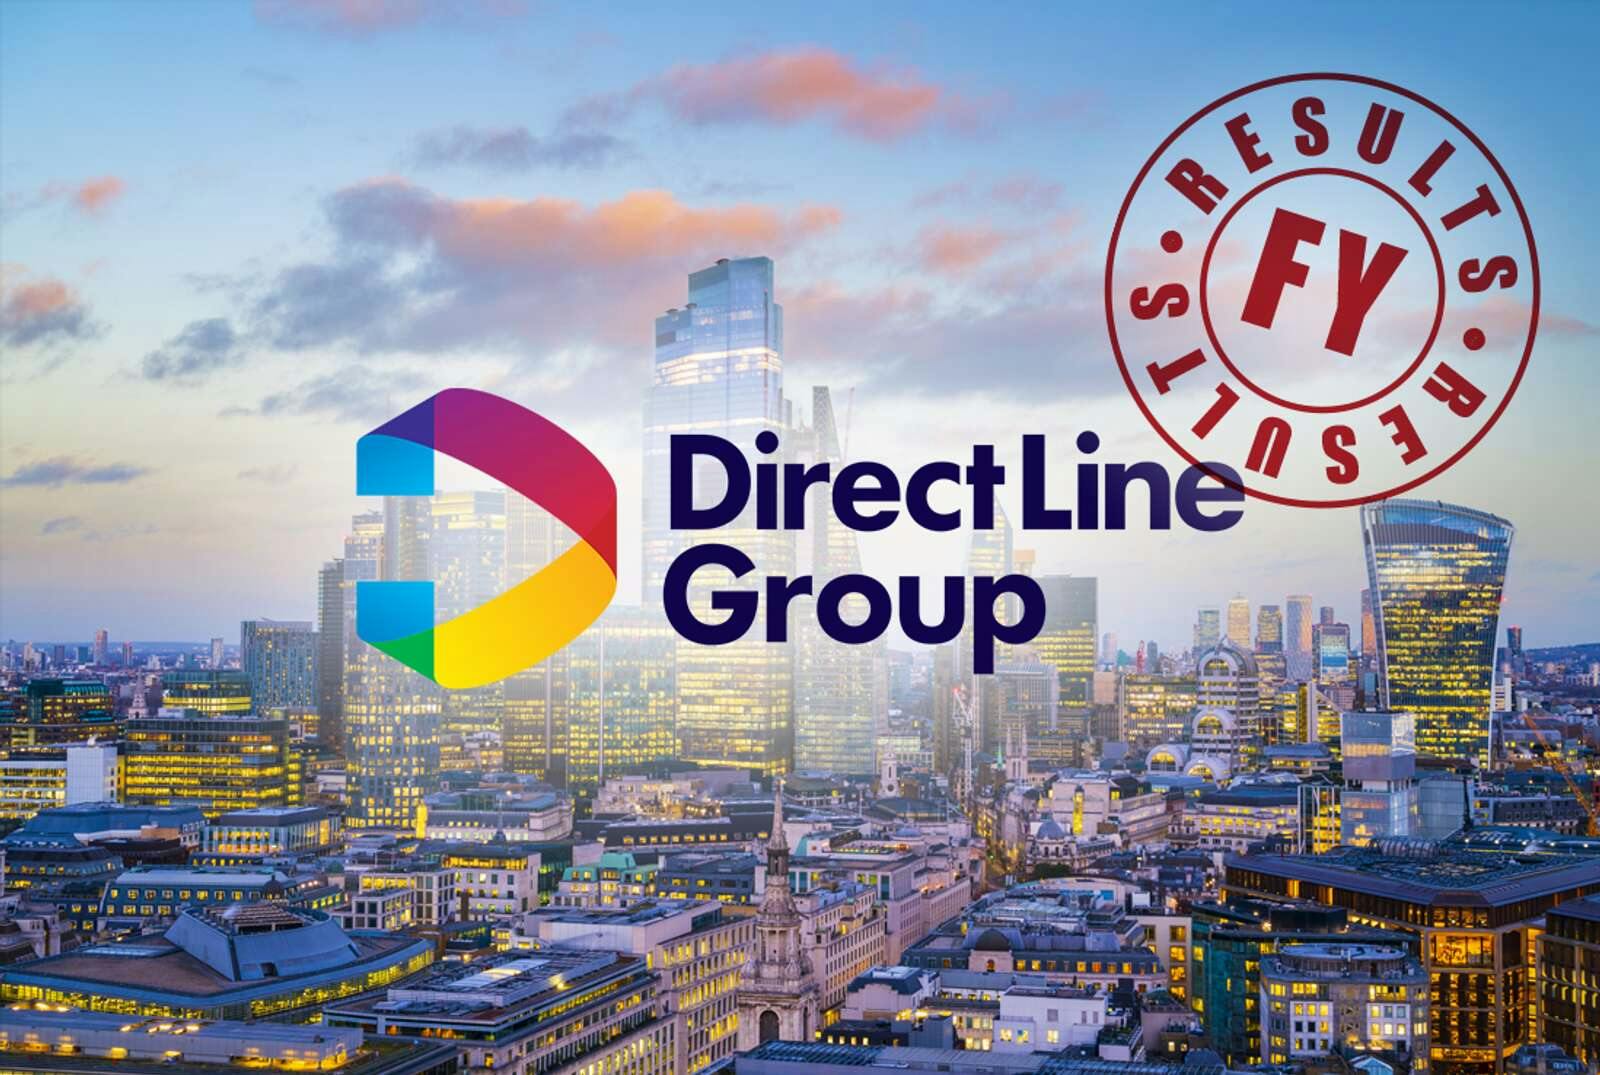 direct line logo

